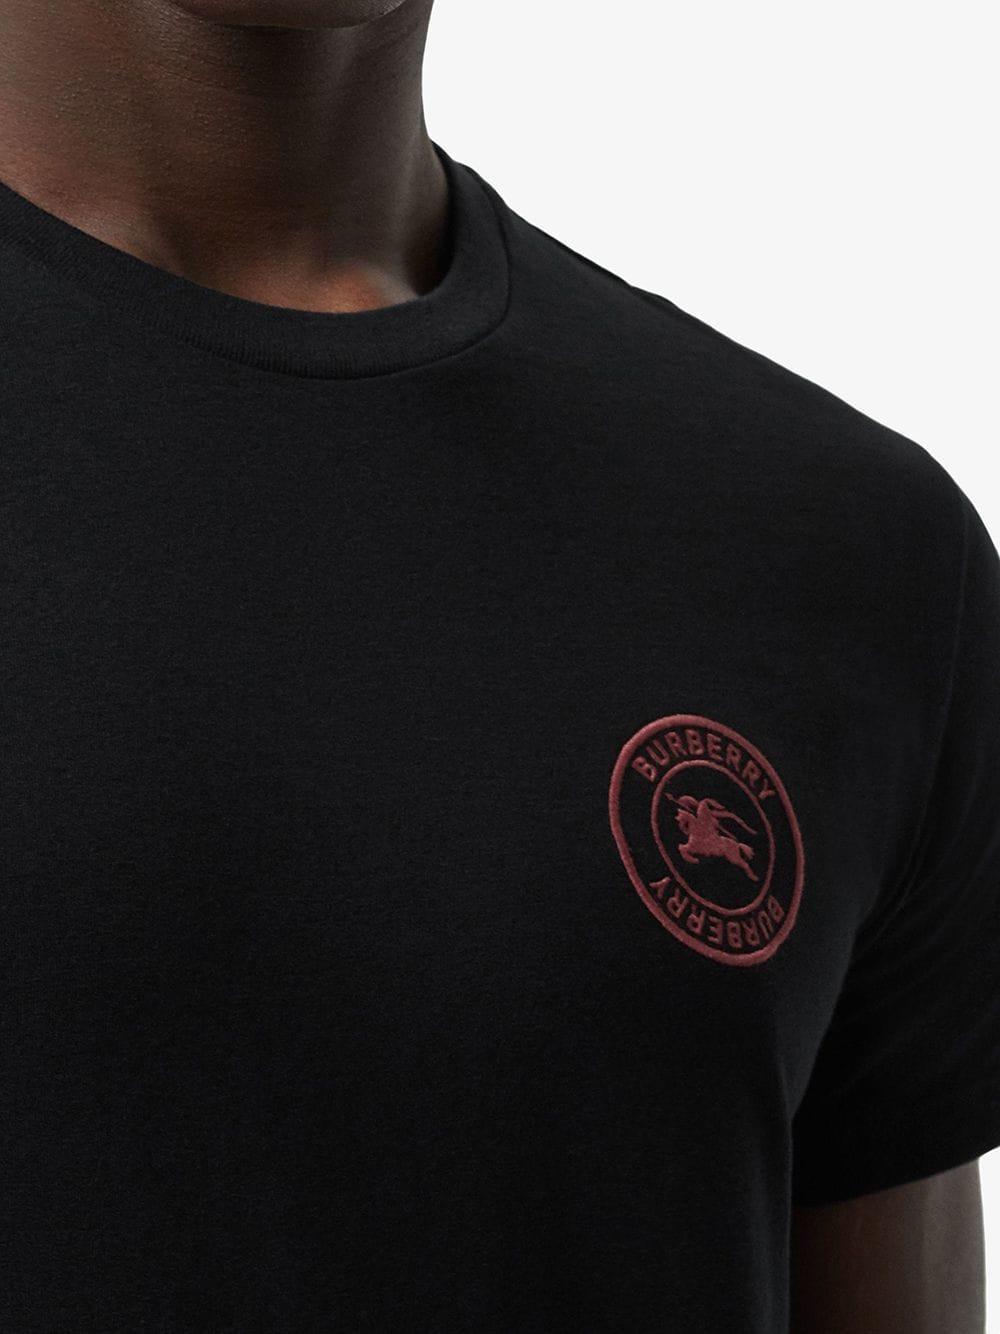 Burberry Cotton Jenson Logo T-shirt in Black for Men - Lyst